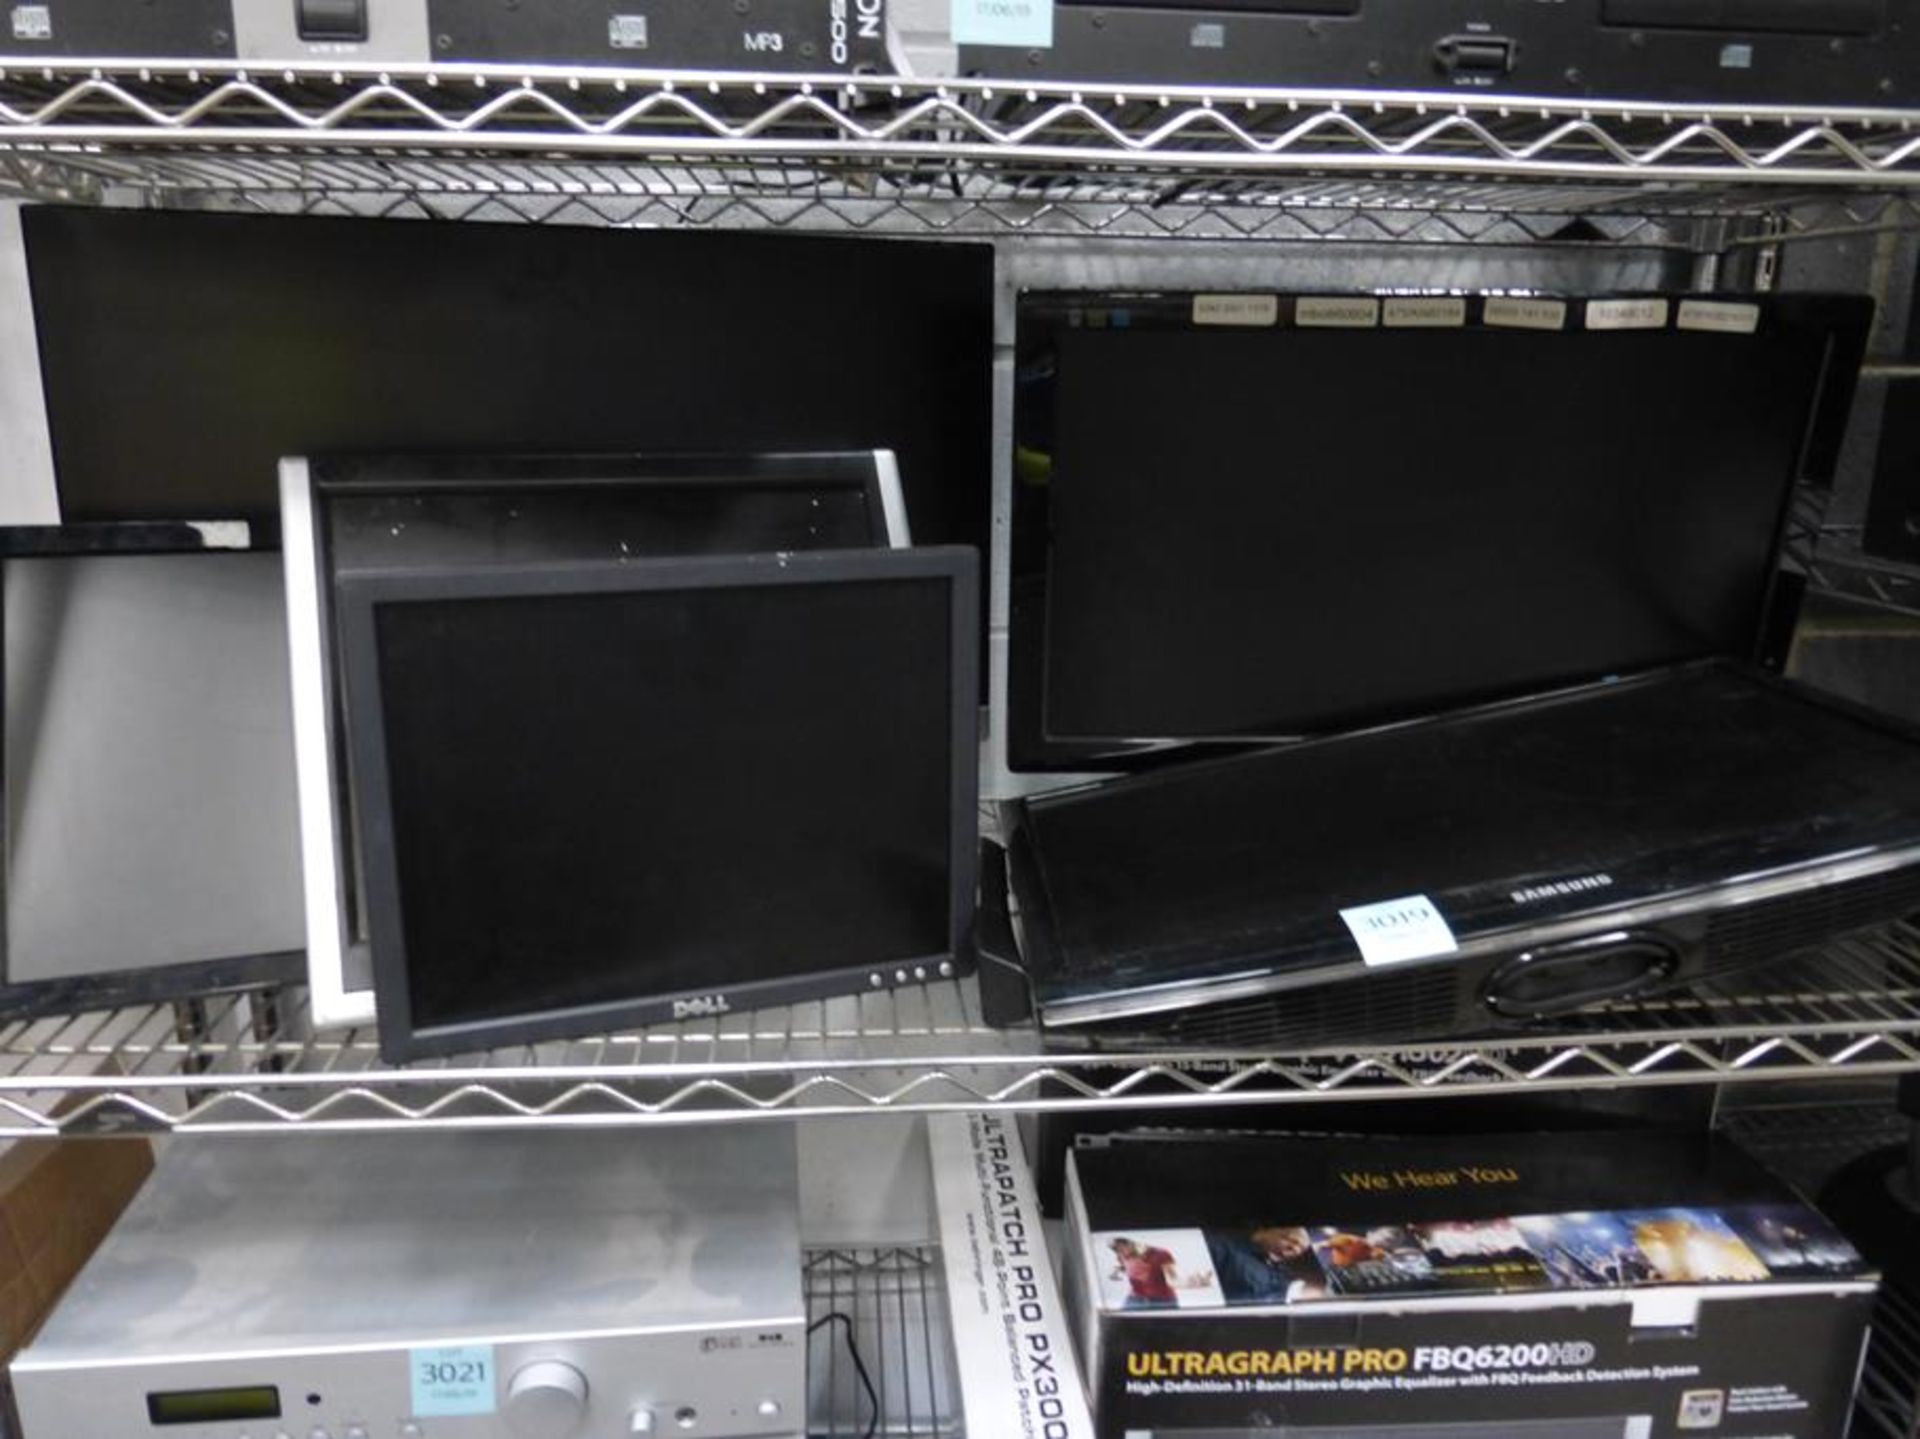 AOC 2436VWA LCD Monitor, Samsung 2333HD TV/LCD Monitor (with remote), AOC 270LM00007 LCD Monitor, 2